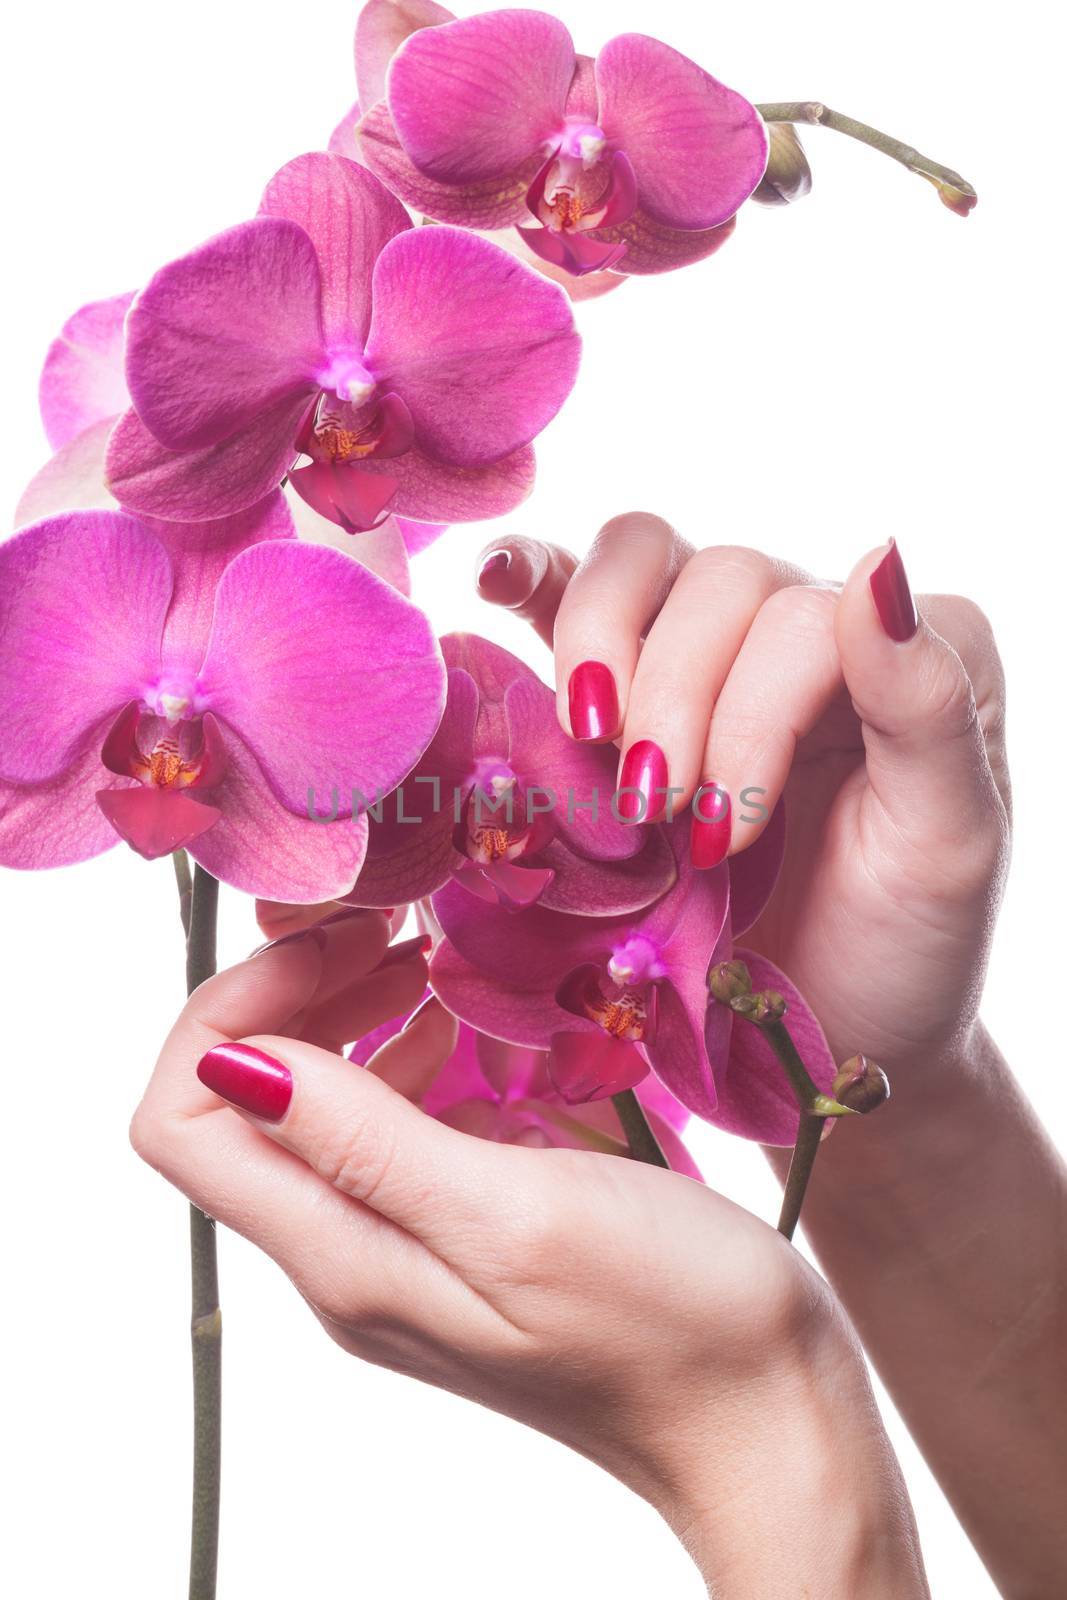 Manicured nails caress dark pink flower pedals by juniart